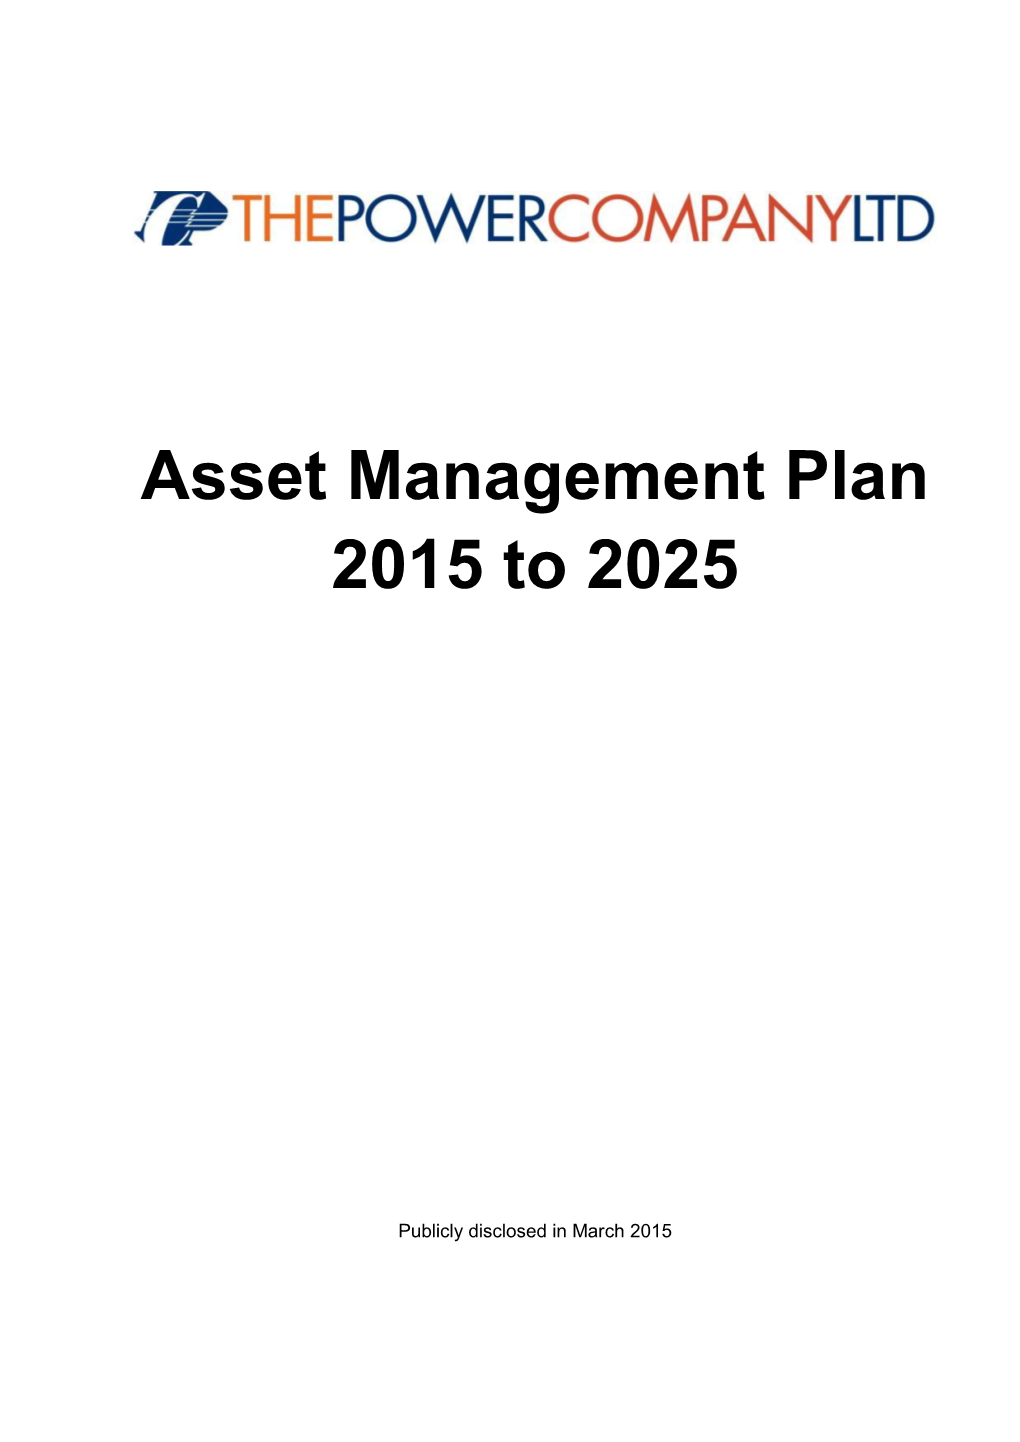 Asset Management Plan 2015 to 2025